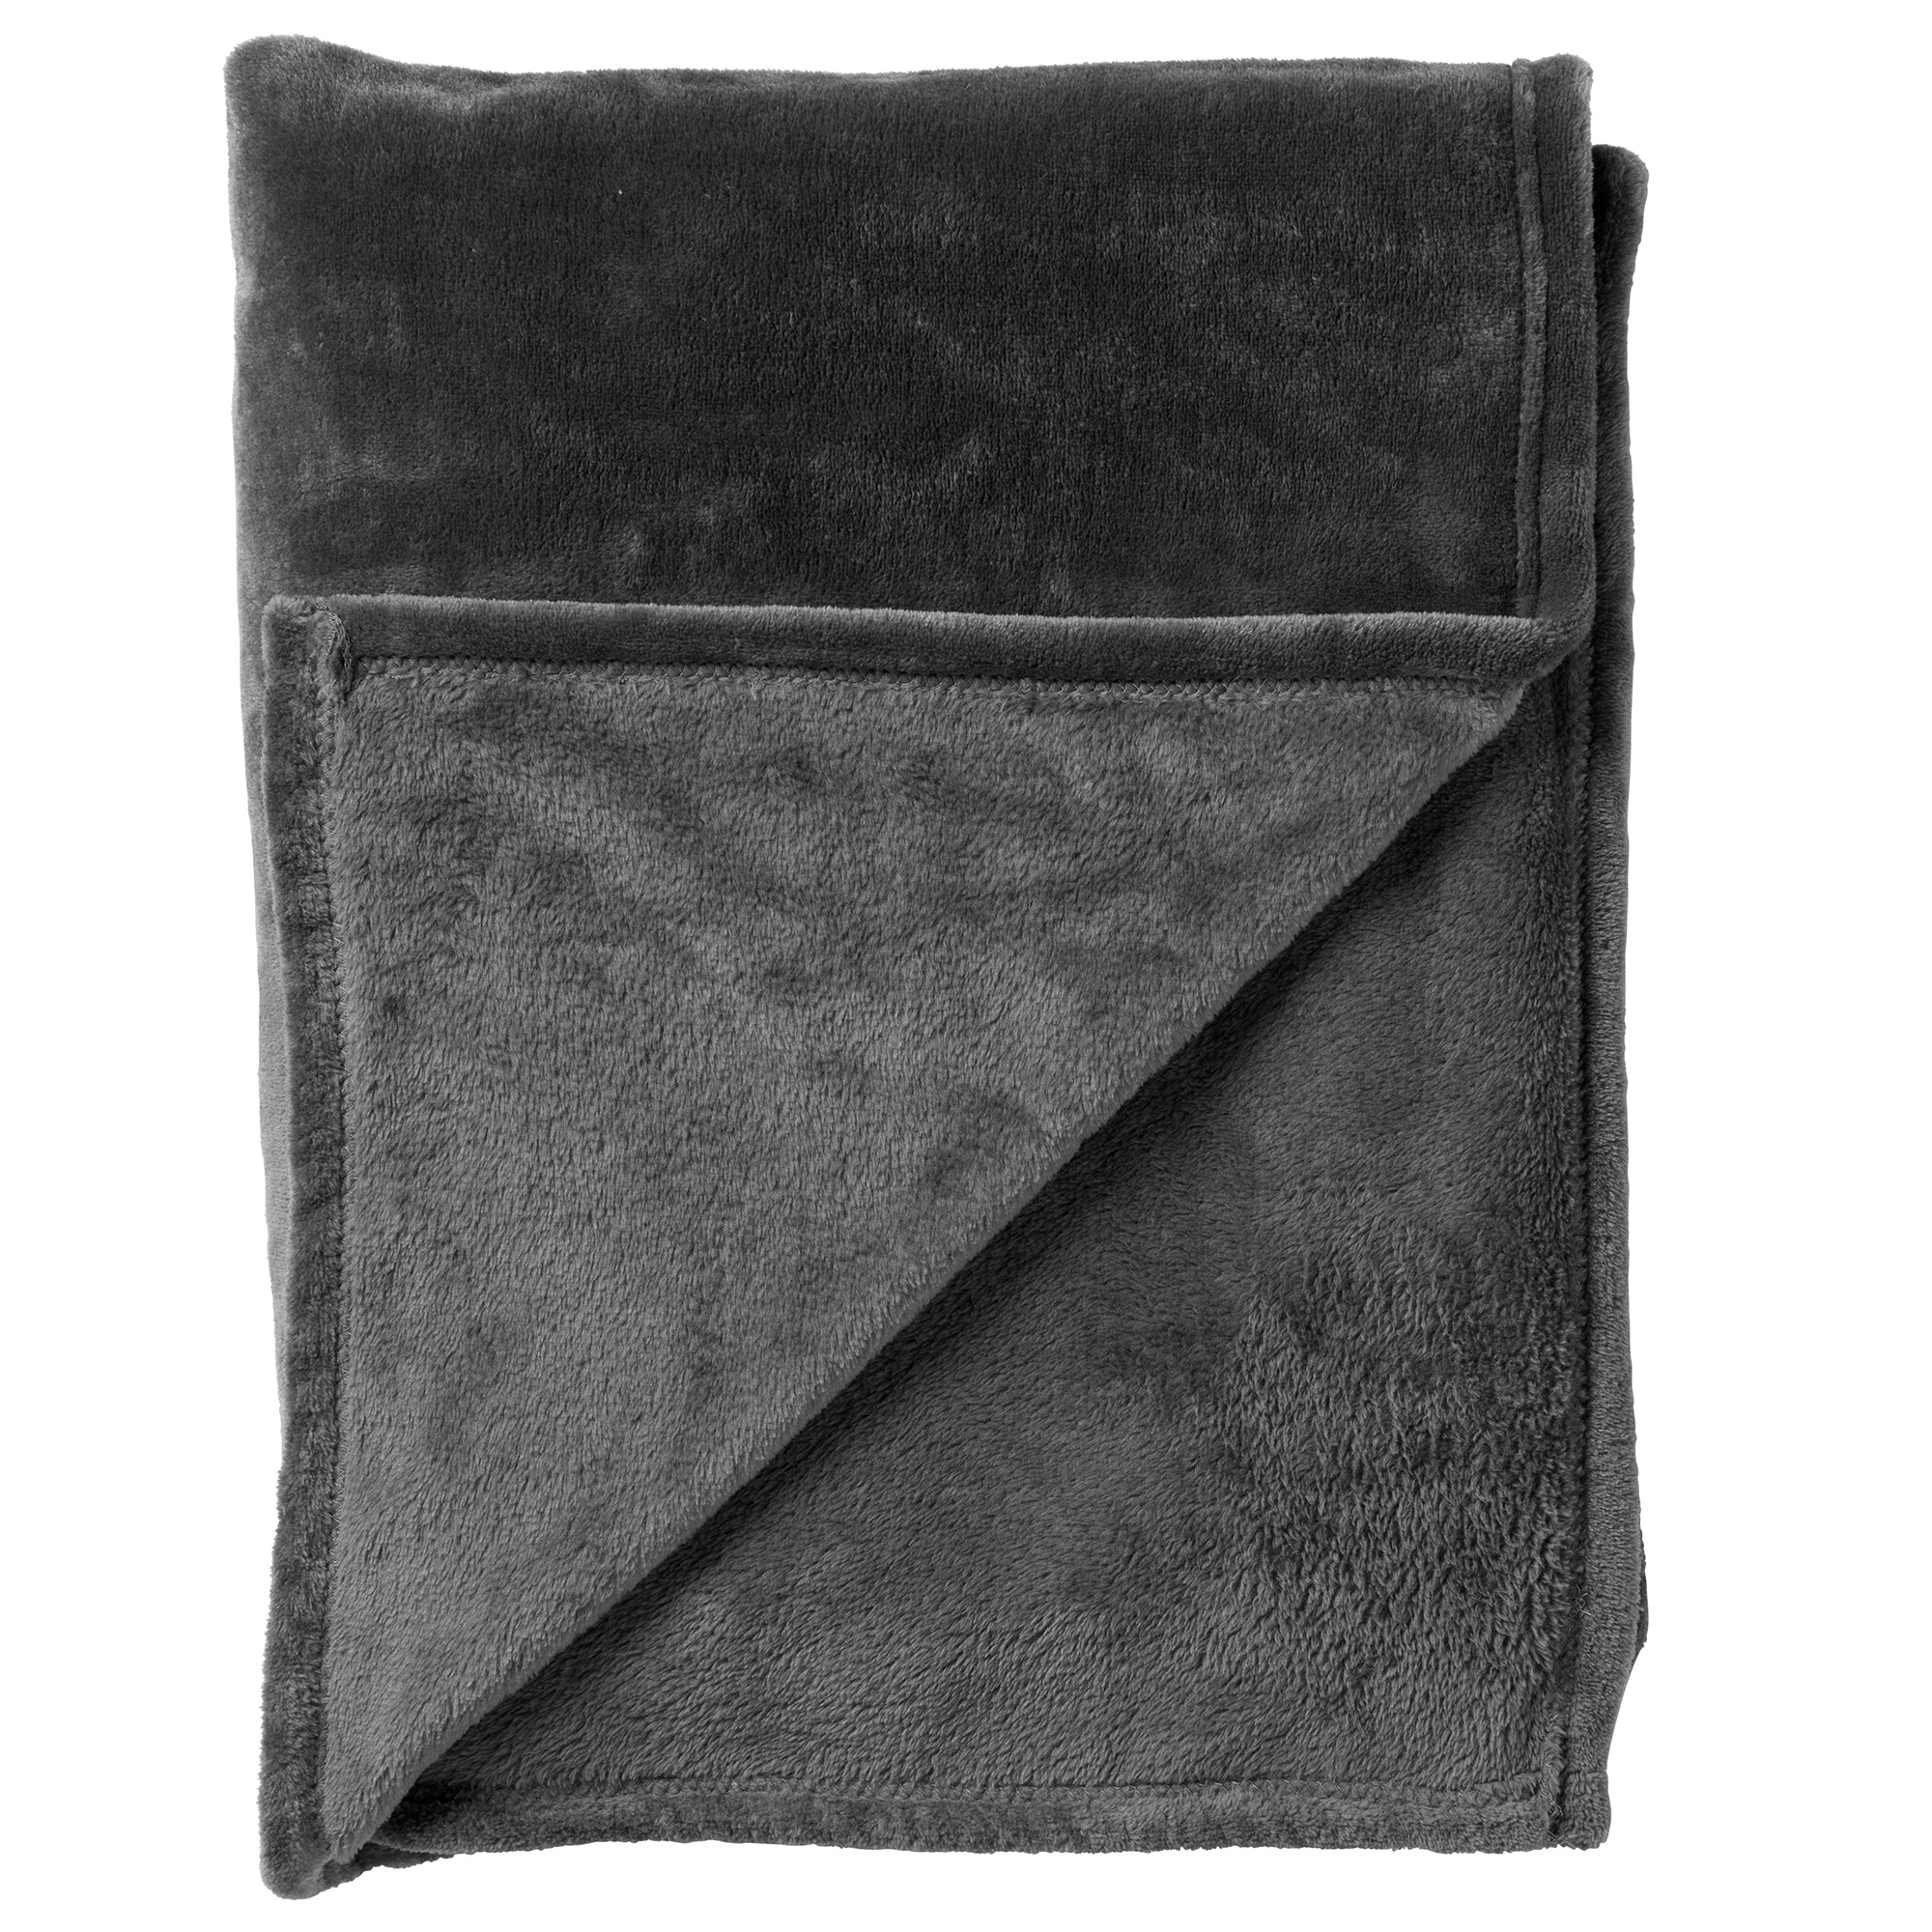 BILLY - Plaid flannel fleece 150x200 cm - Charcoal Grey - antraciet - superzacht